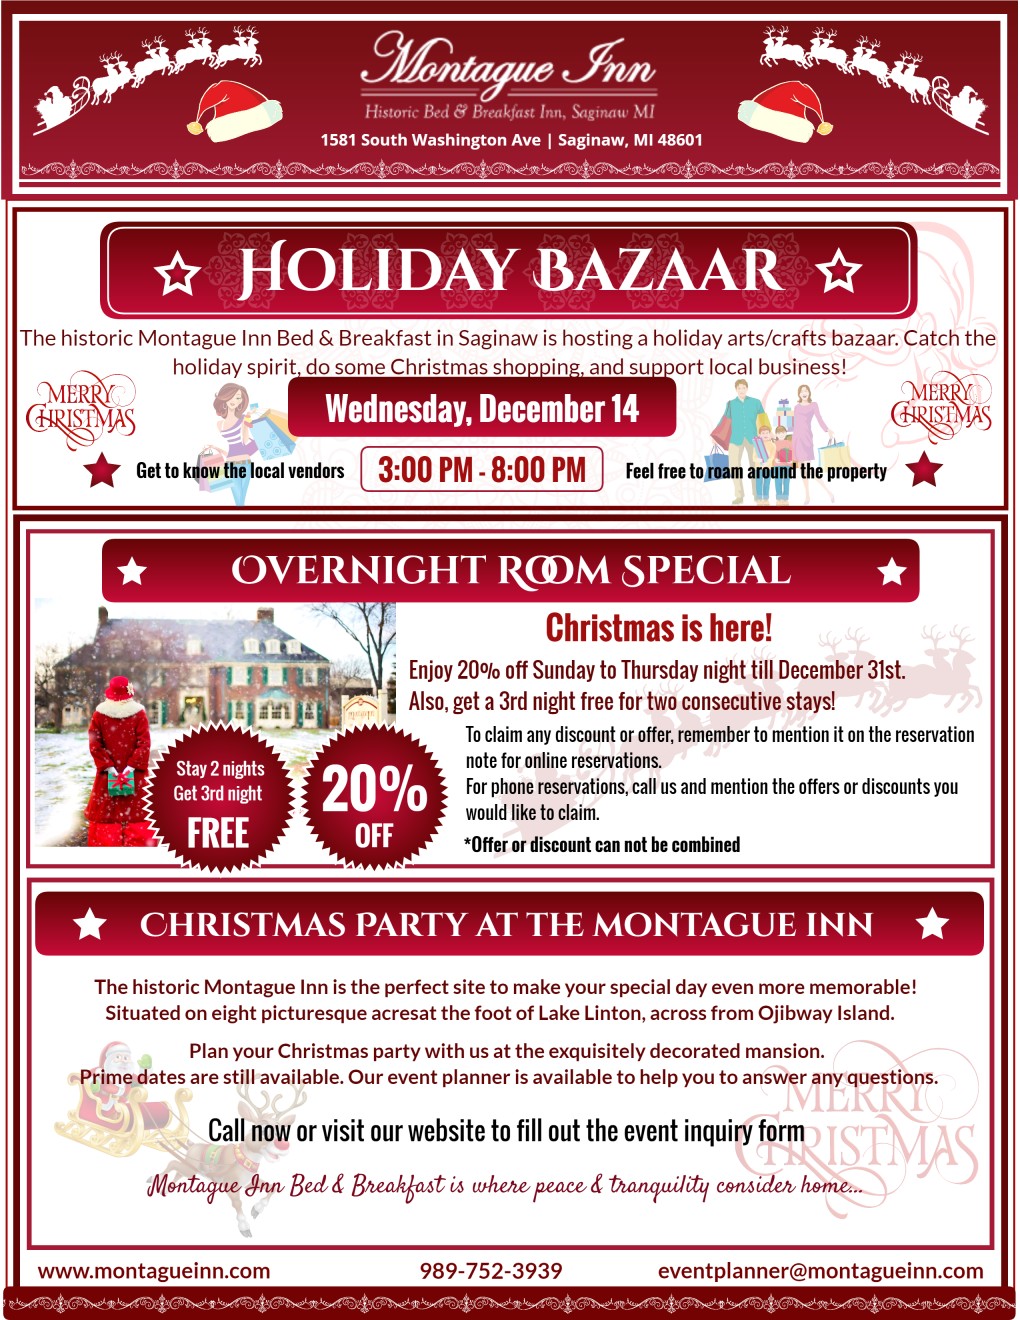 Montague Inn presents holiday bazaar